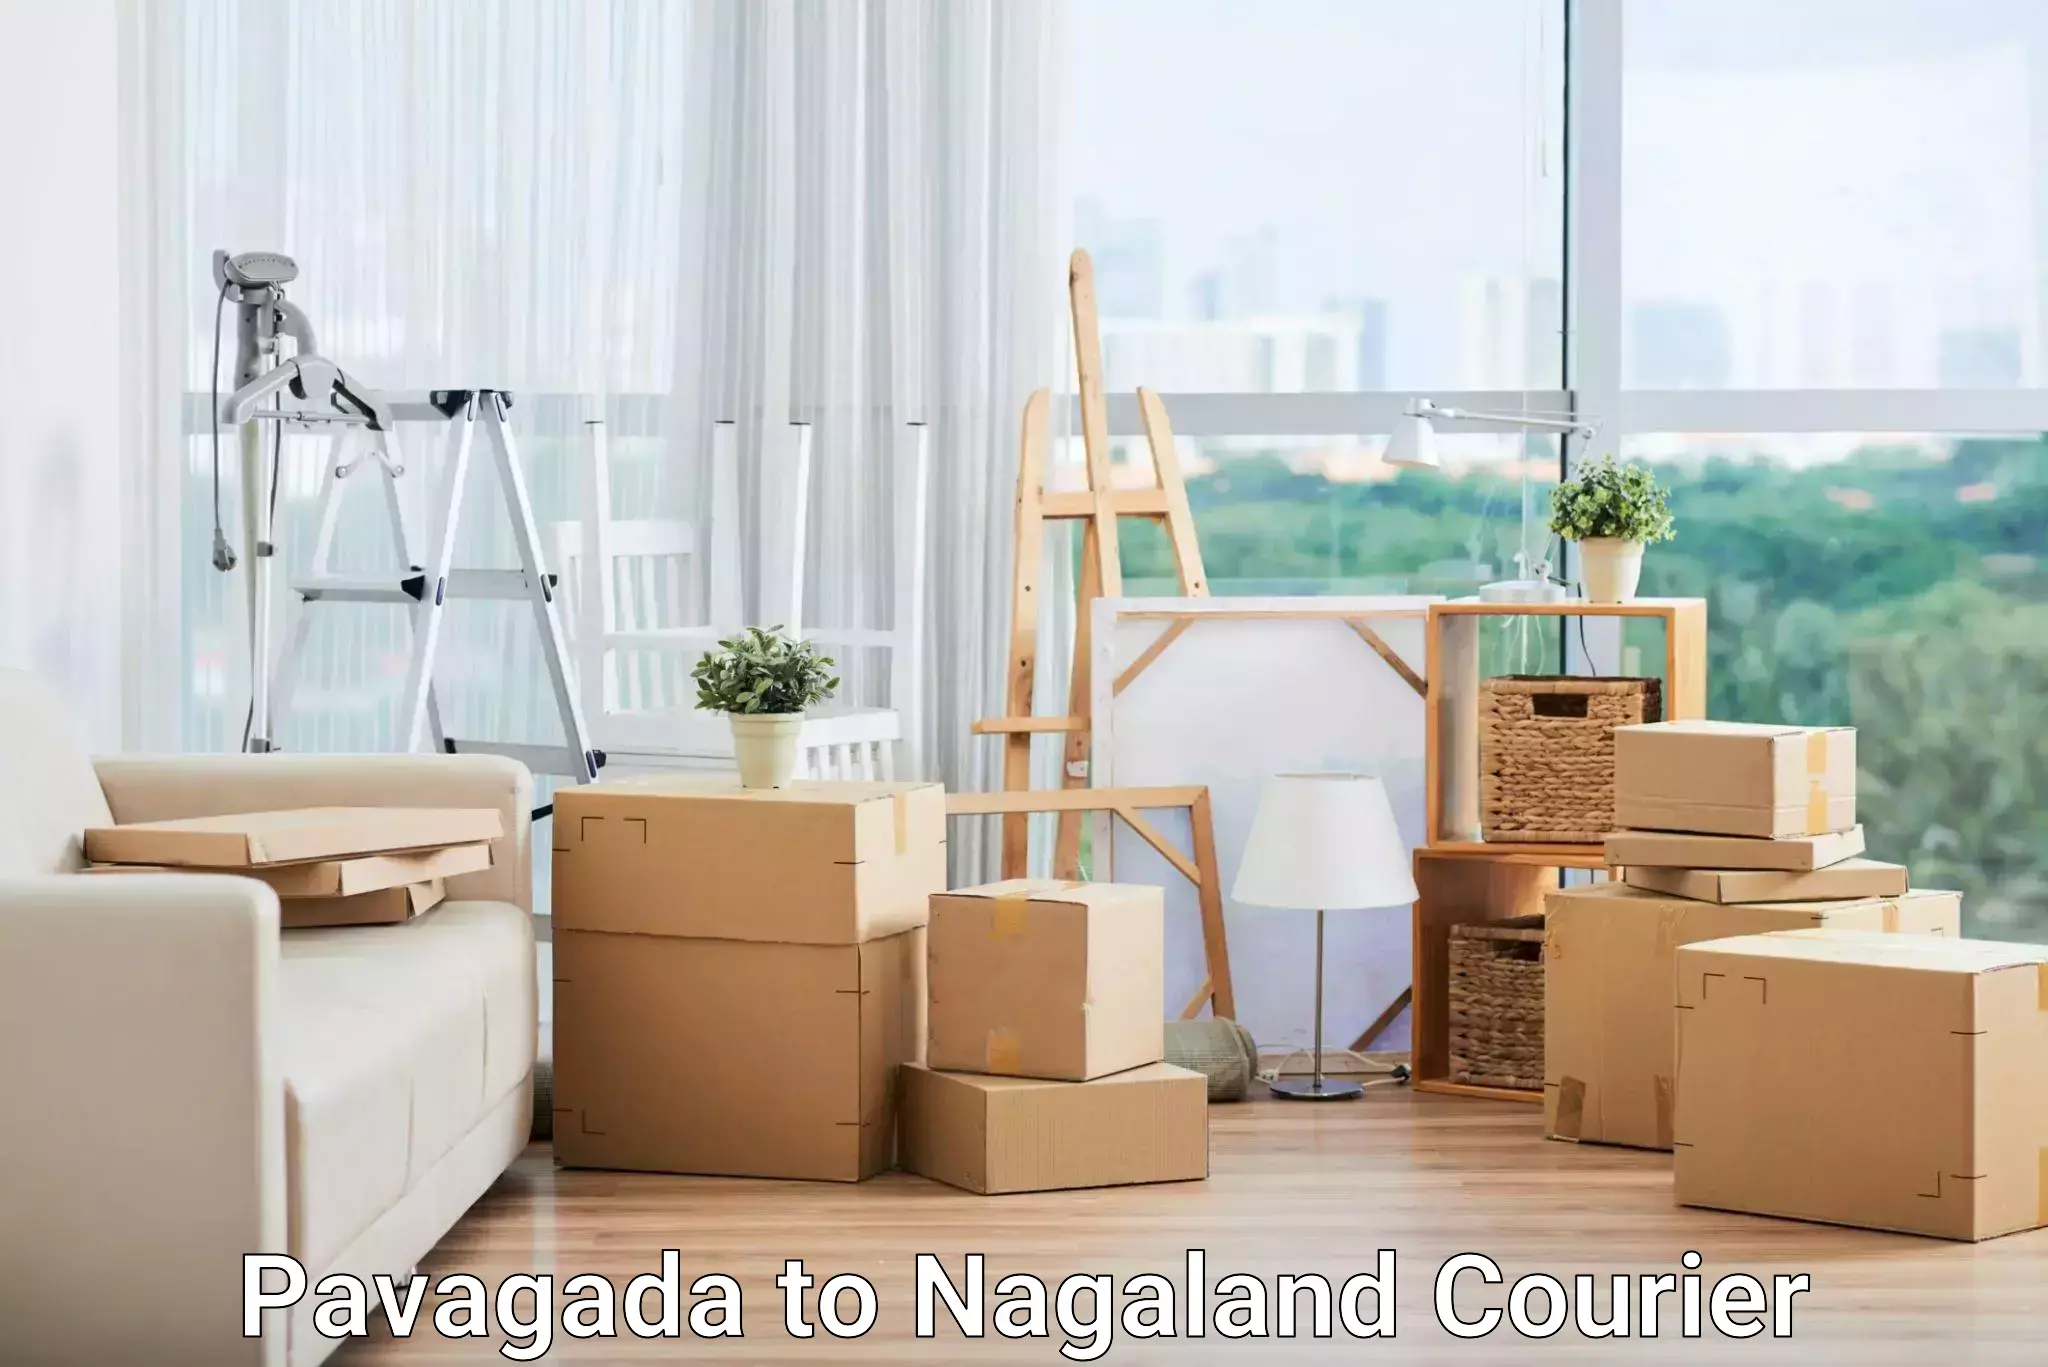 International courier networks Pavagada to Nagaland